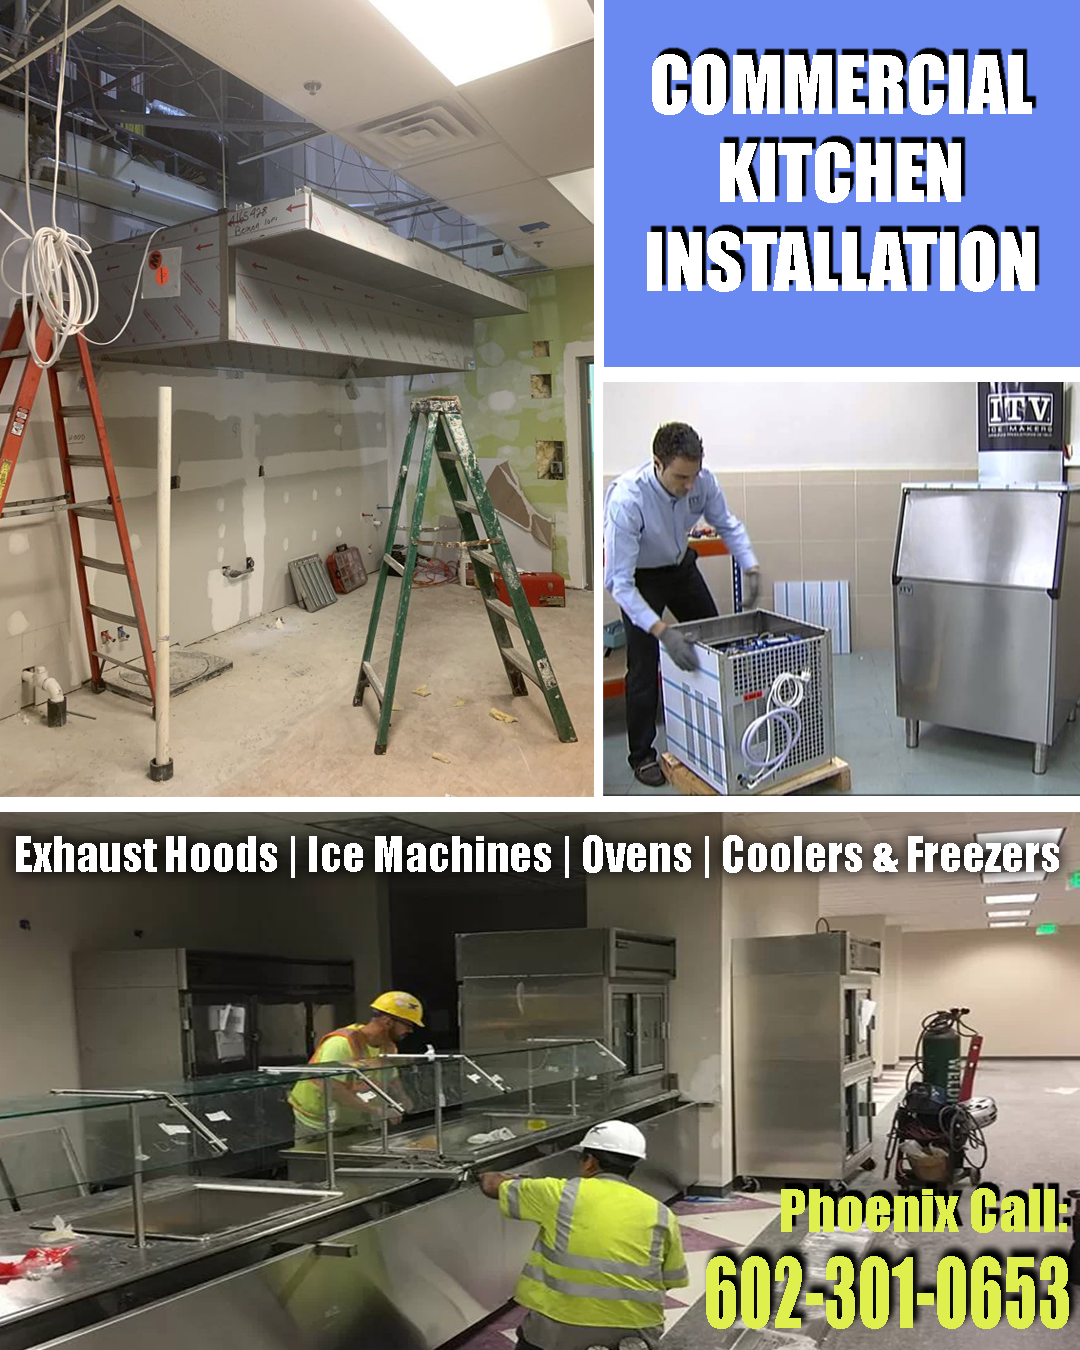 https://restaurantequipmentrepair.org/wp-content/uploads/2022/10/commercial-kitchen-installation-phoenix.png